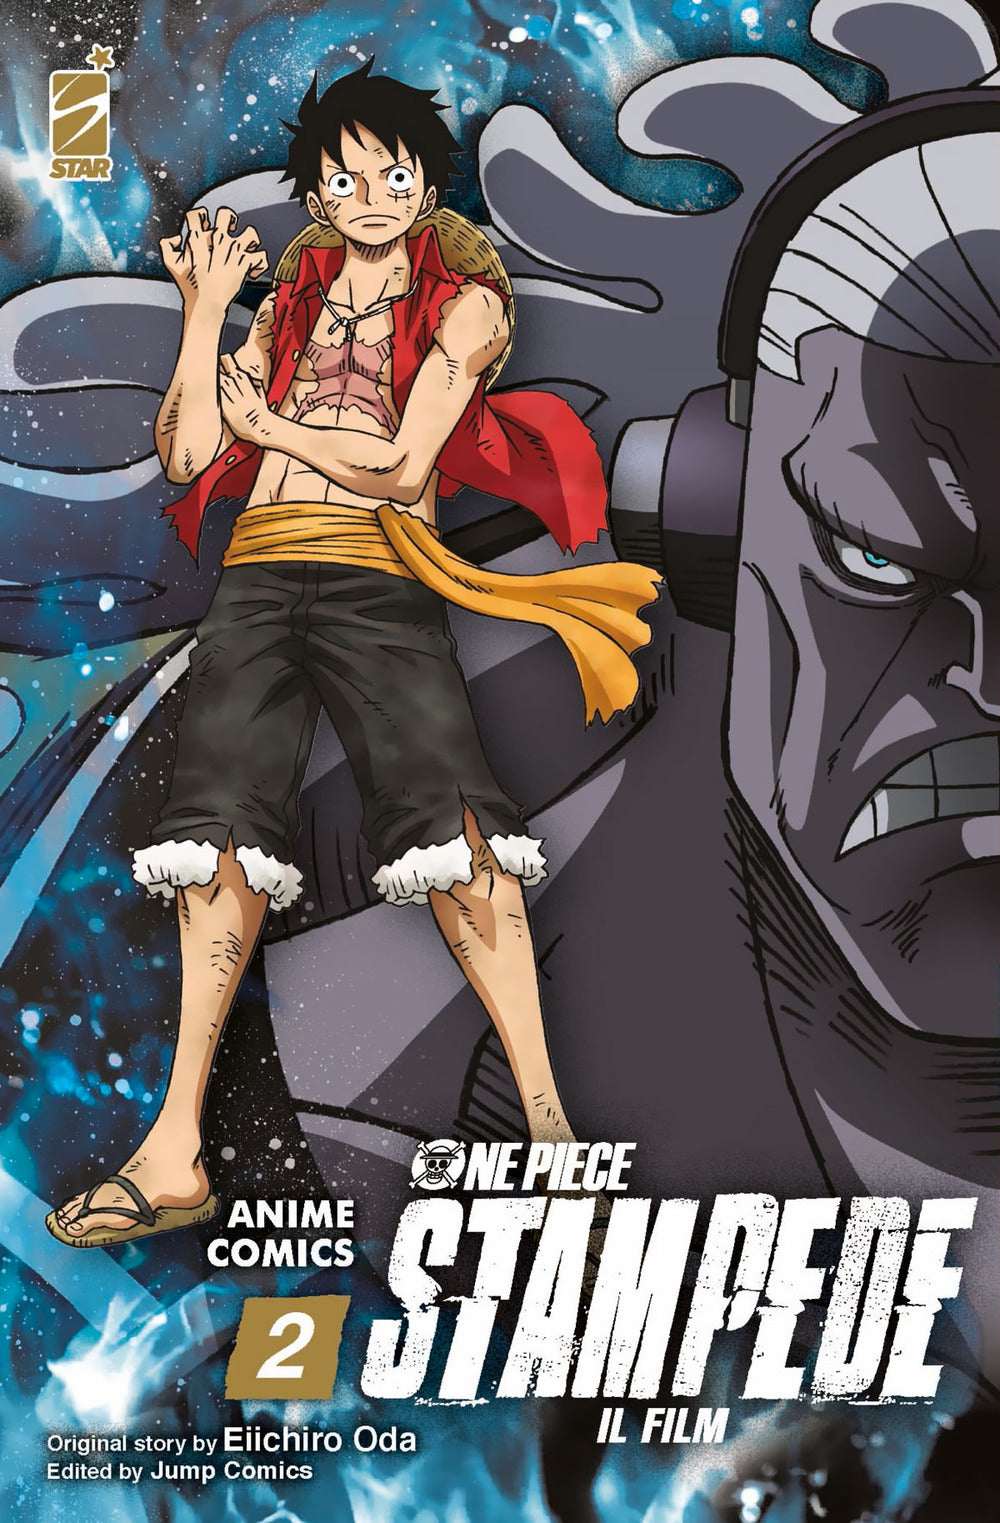 One piece Stampede. Il film. Anime comics. Vol. 2.